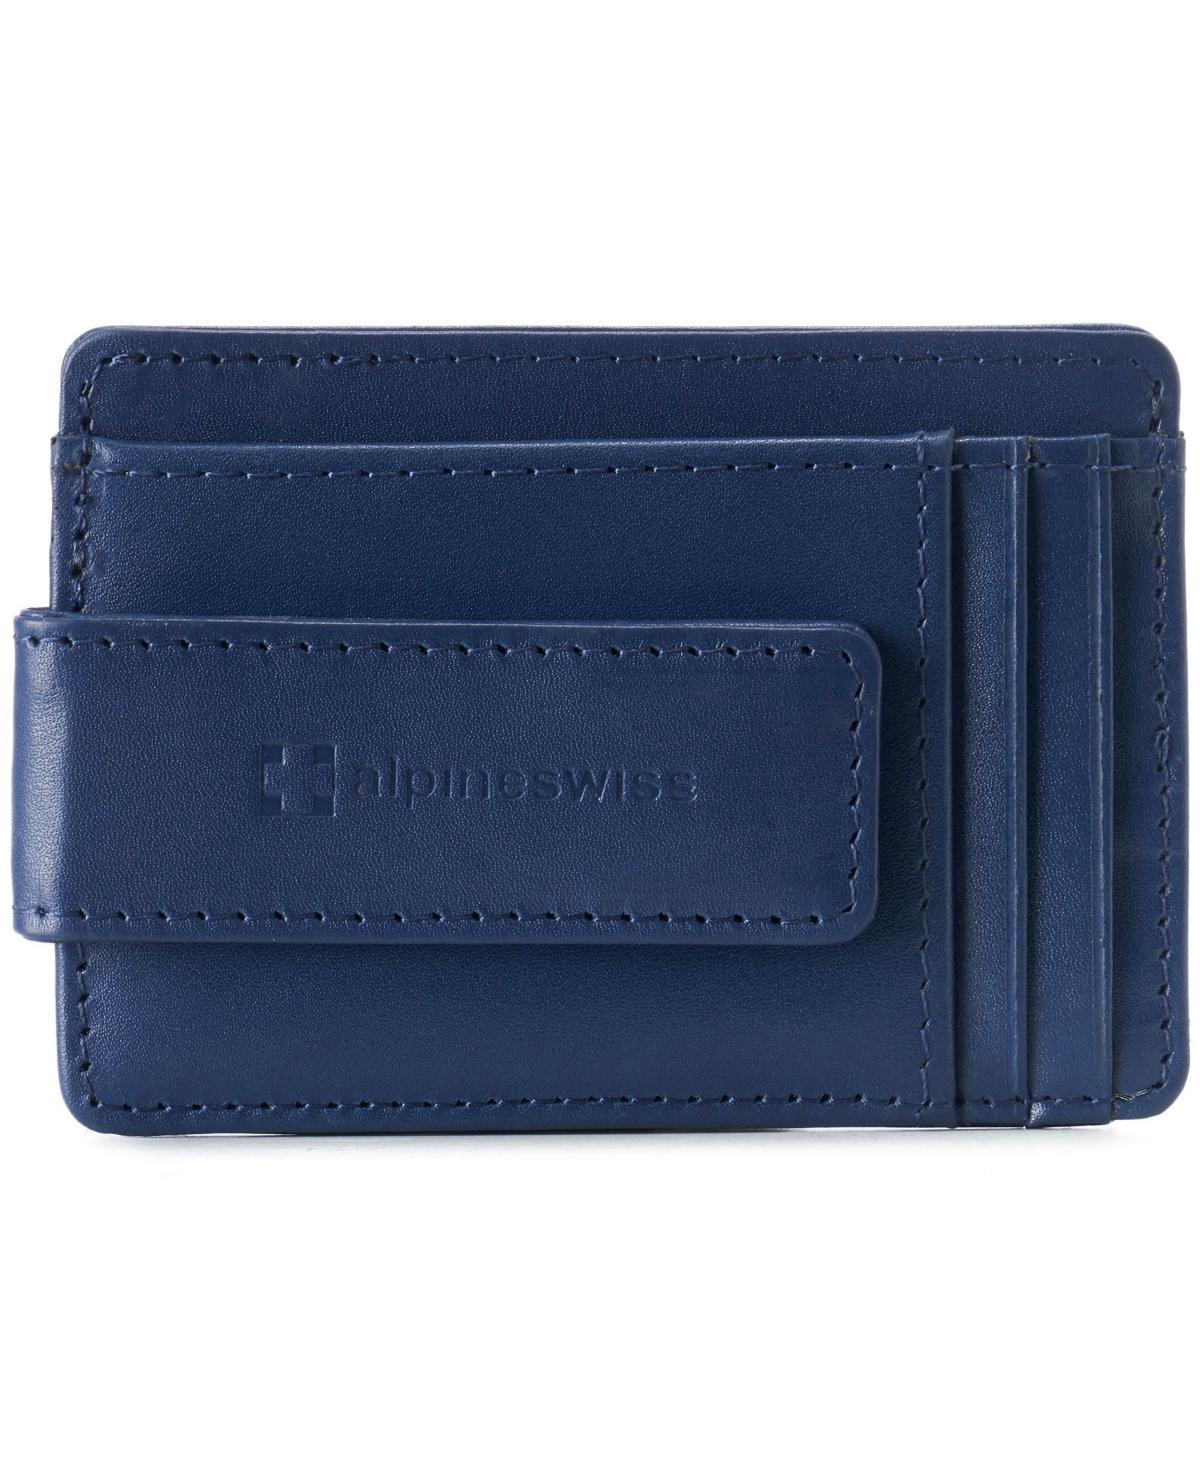 Alpine Swiss Men's RFID Front Pocket Wallet